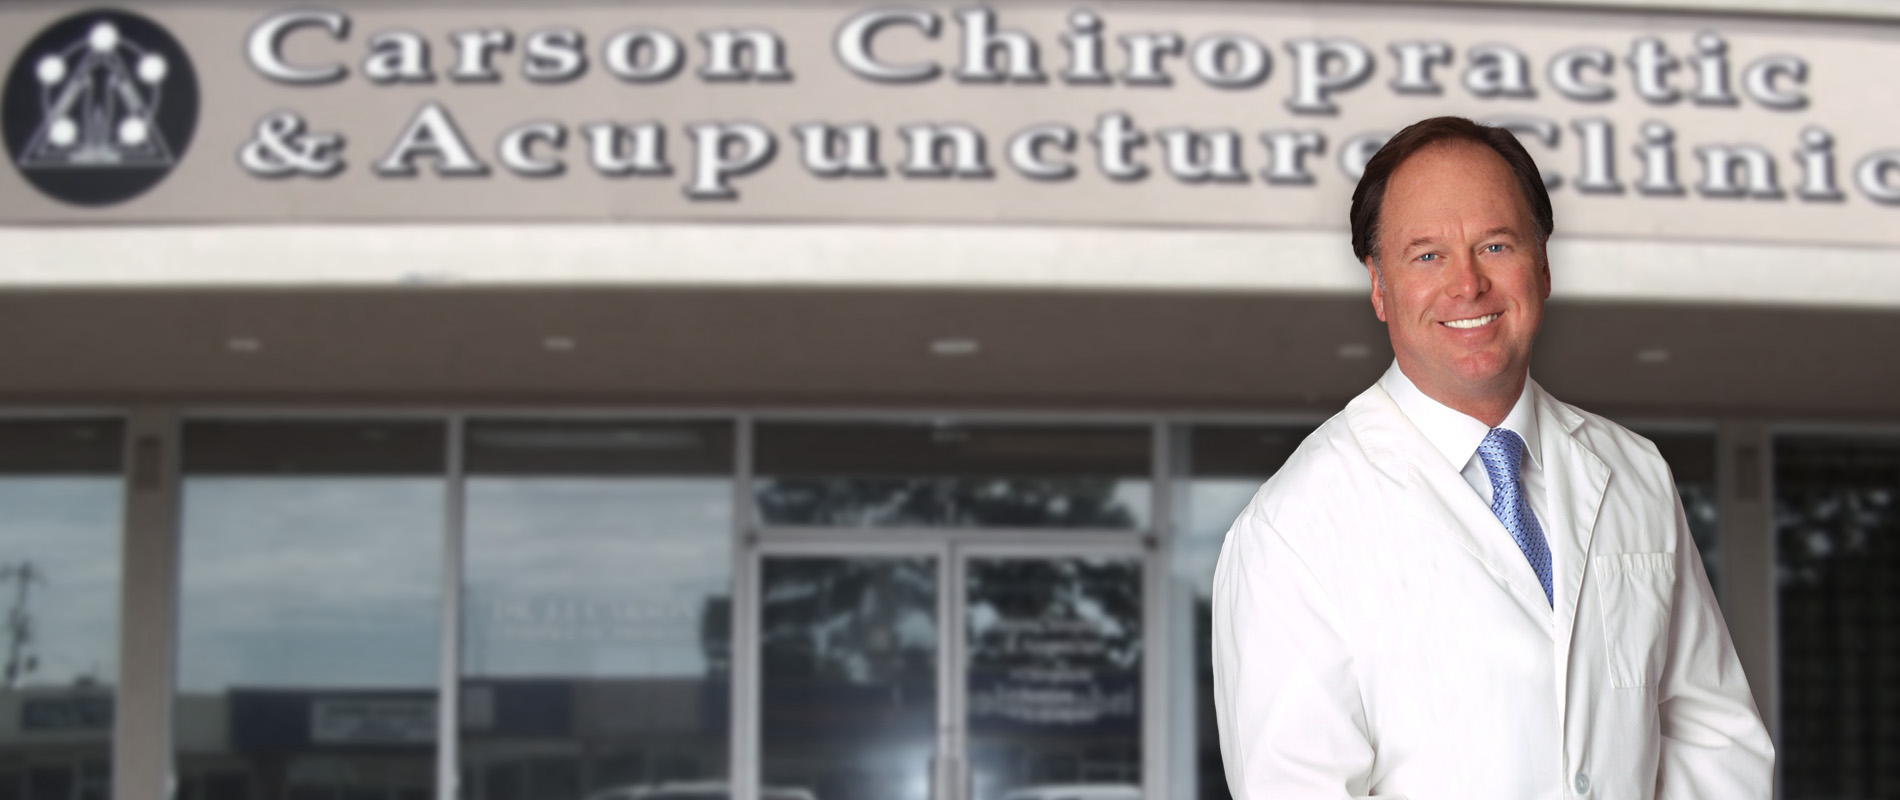 Chiropractor Hot Springs AR Jeffrey Carson